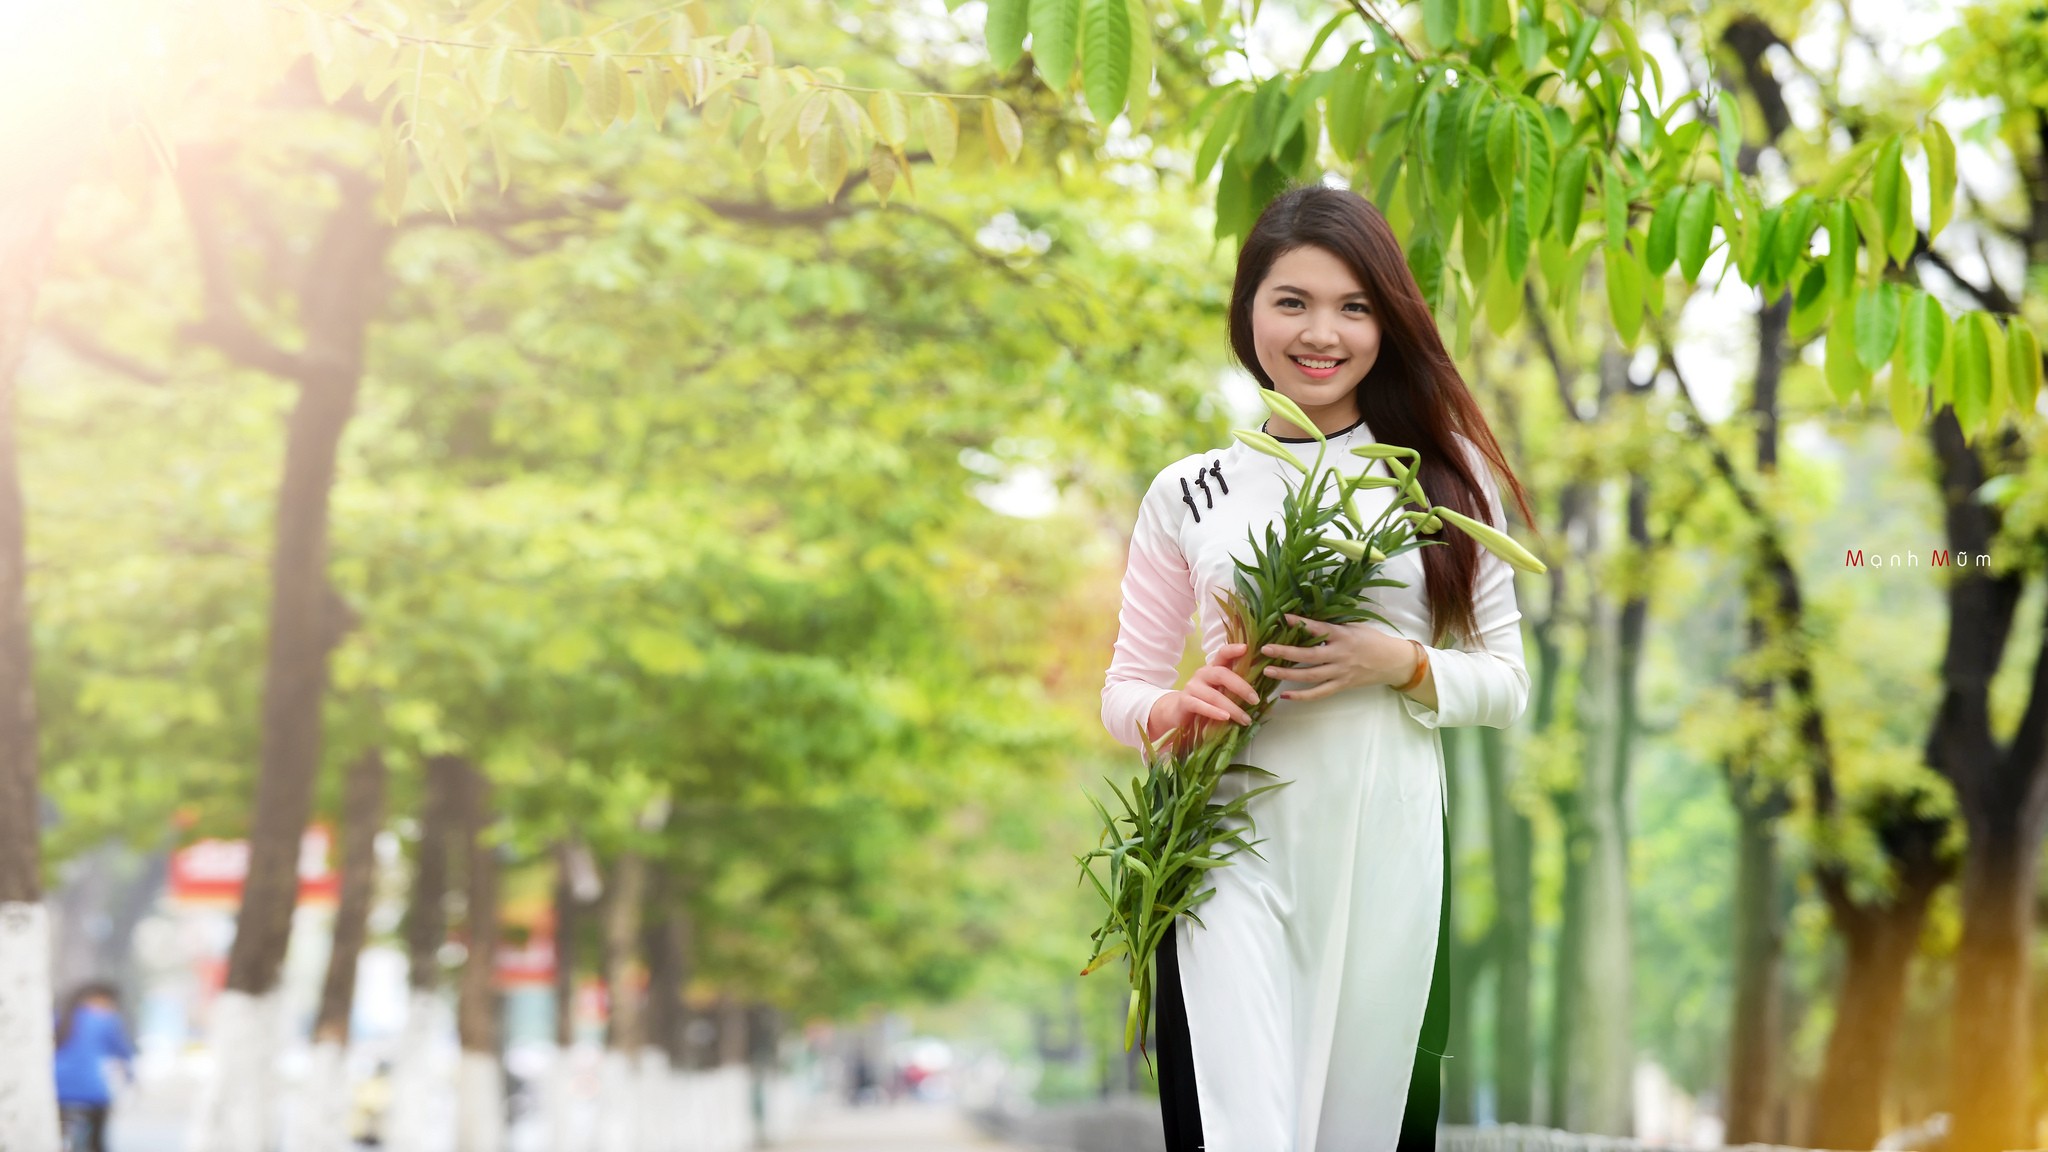 People 2048x1152 women outdoors Asian plants leaves sunlight brunette women trees urban smiling